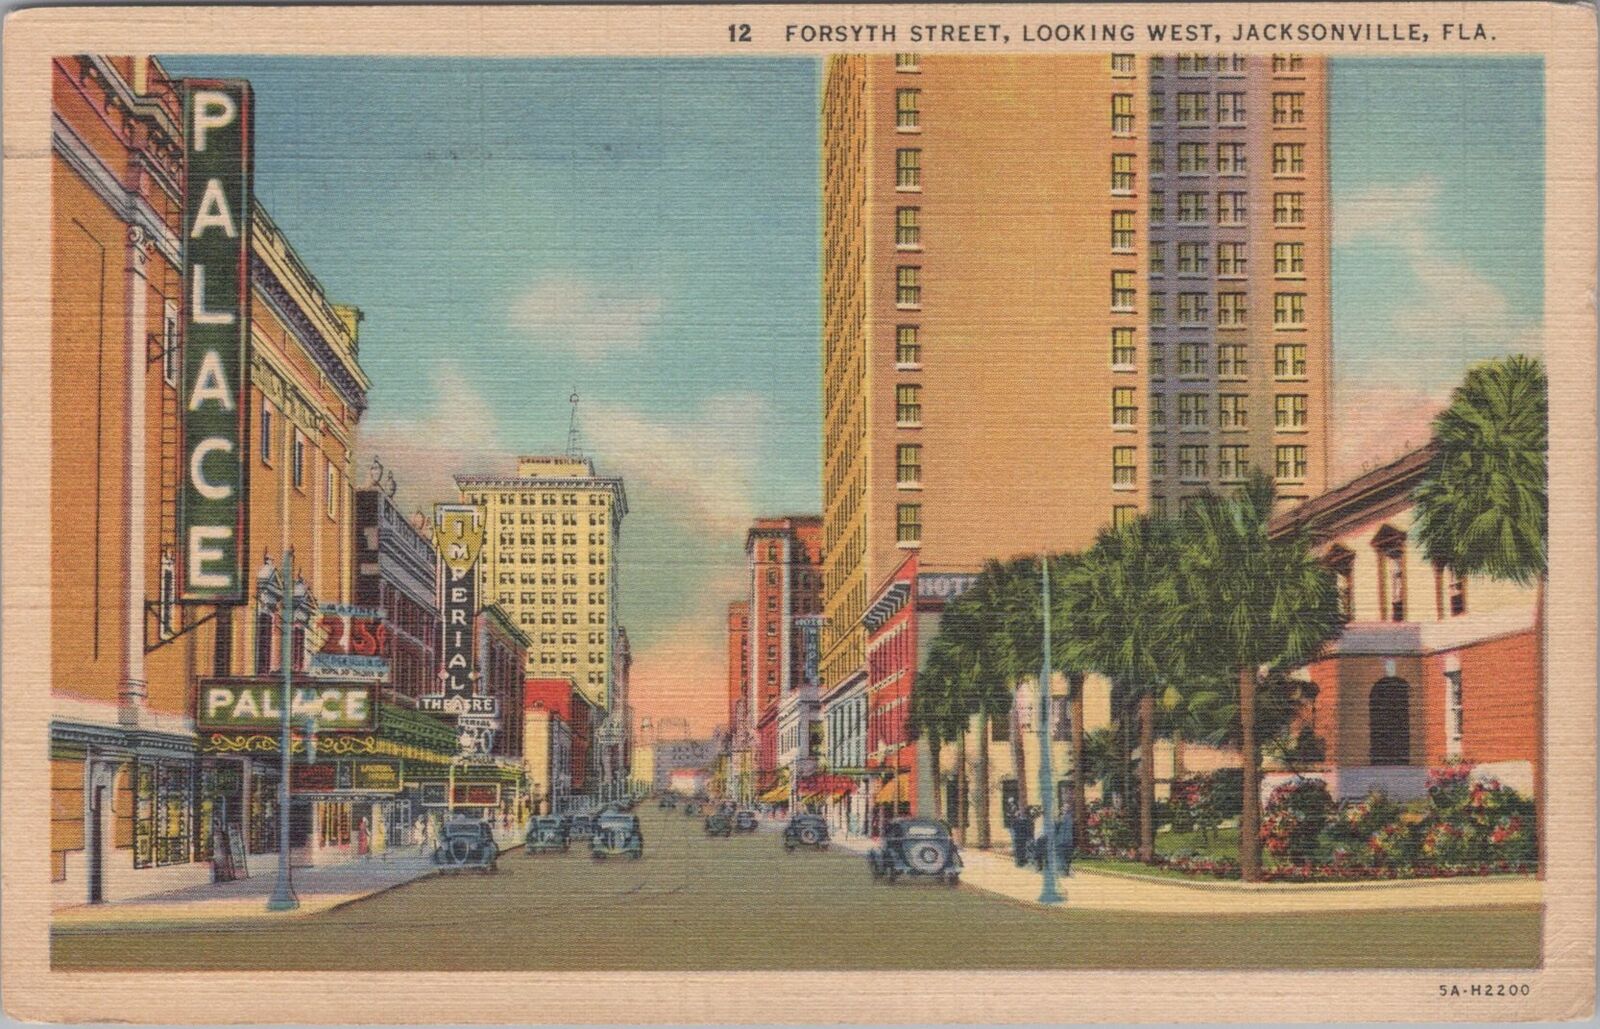 Forsyth Street Looking West, Jacksonville, Florida 1940 Postcard